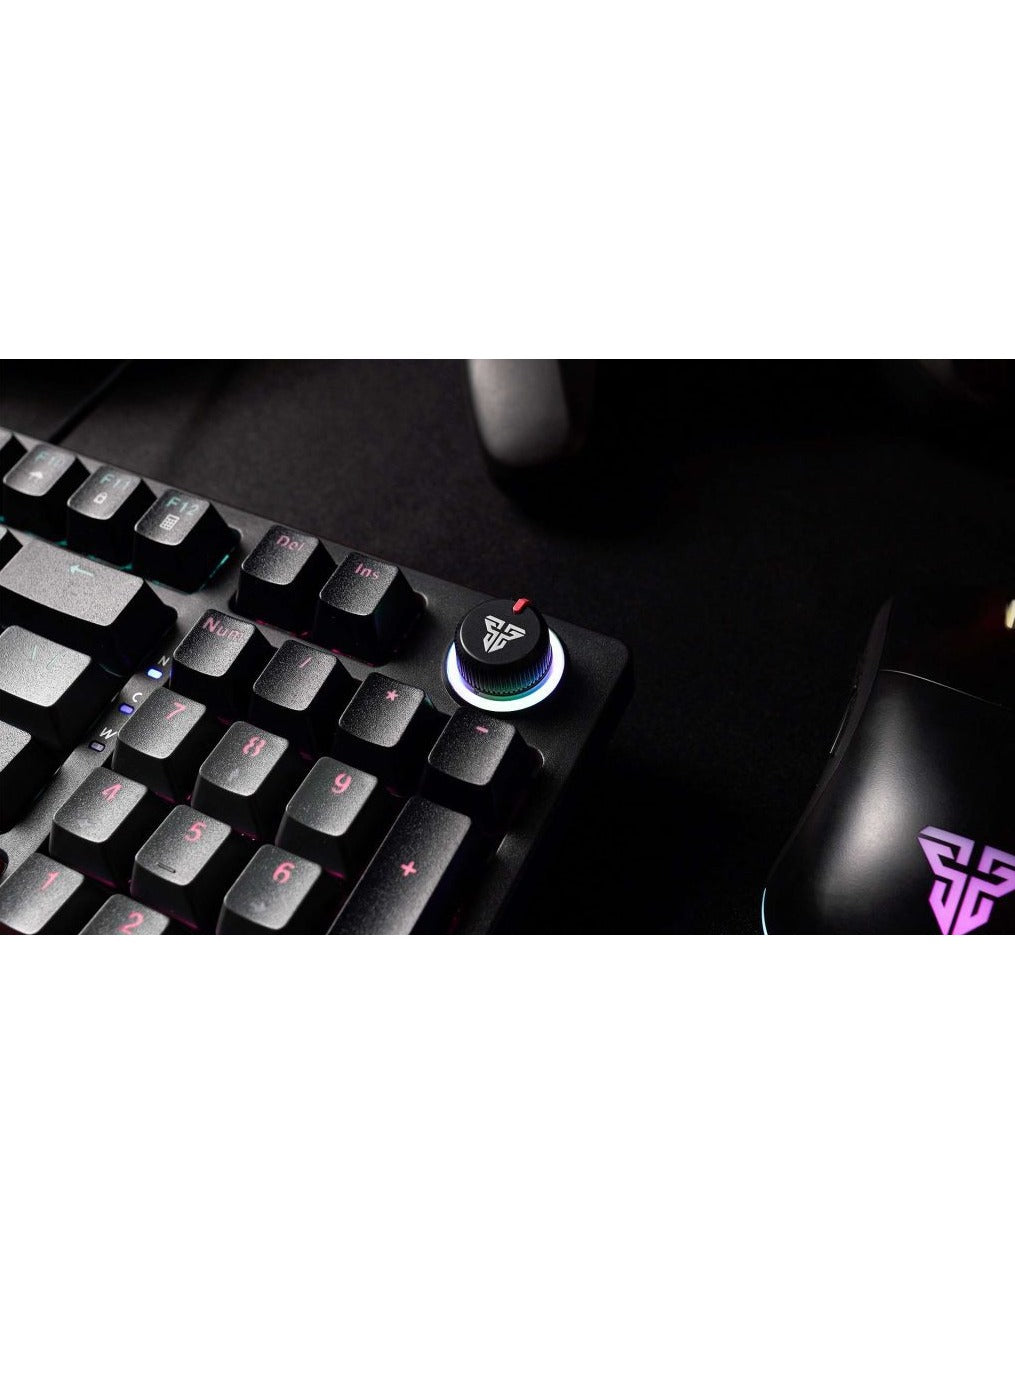 FANTECH MK890 RGB Keyboard Gaming Mechanical Full Size , Red Switch